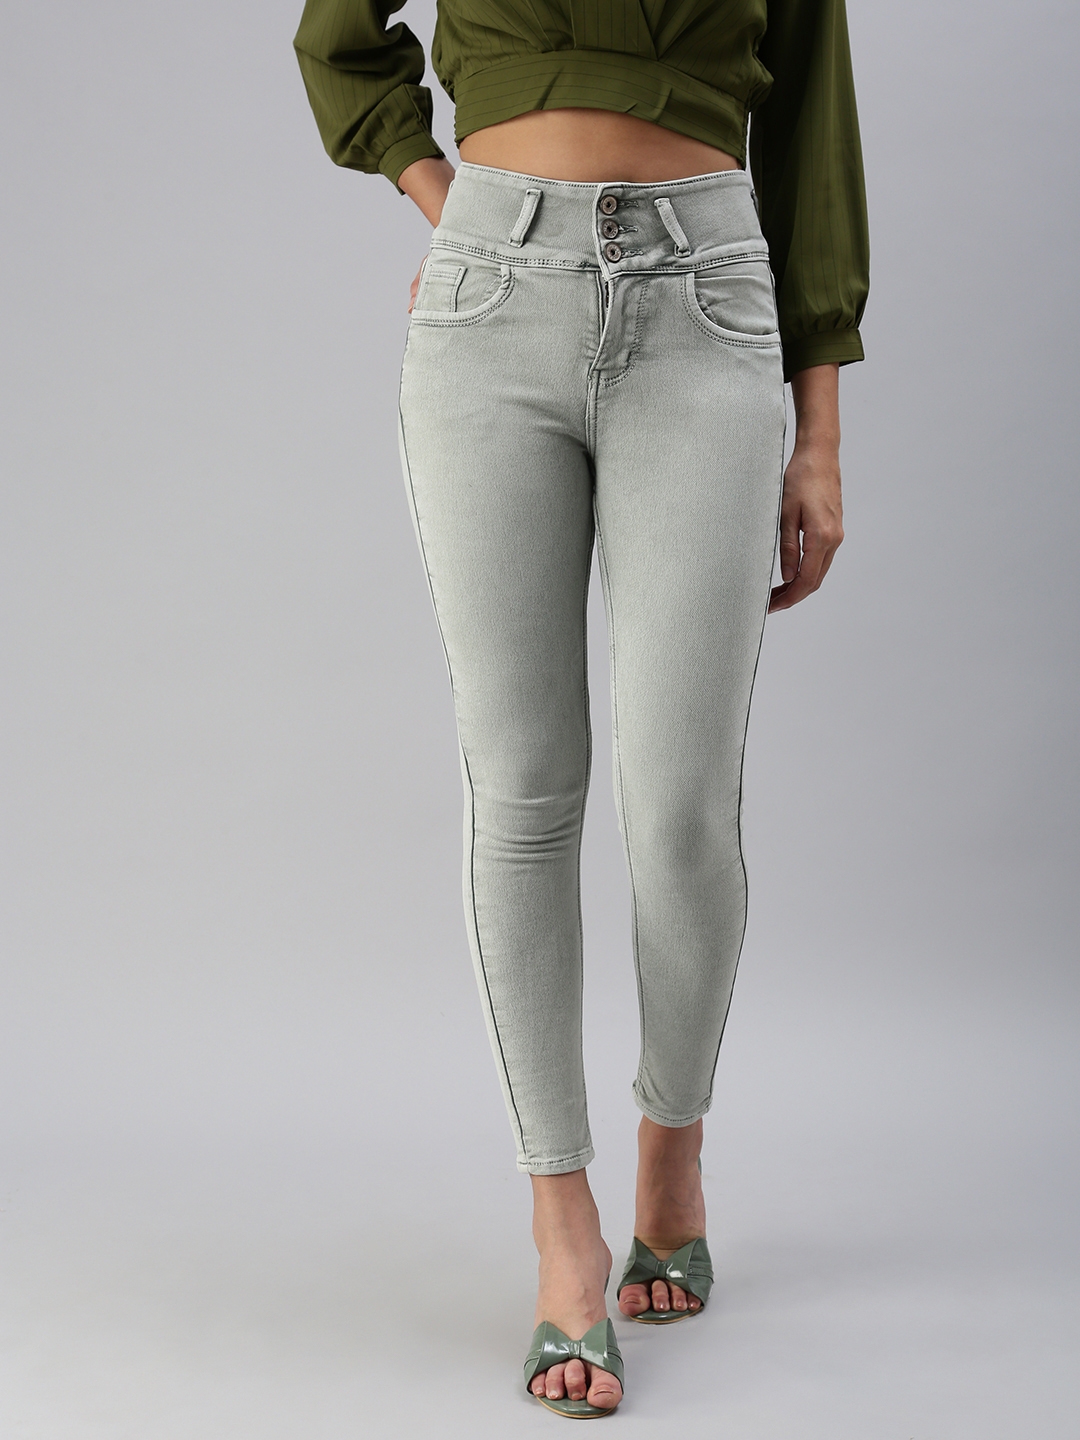 SHOWOFF Women's Clean Look Green Skinny Fit Denim Jeans